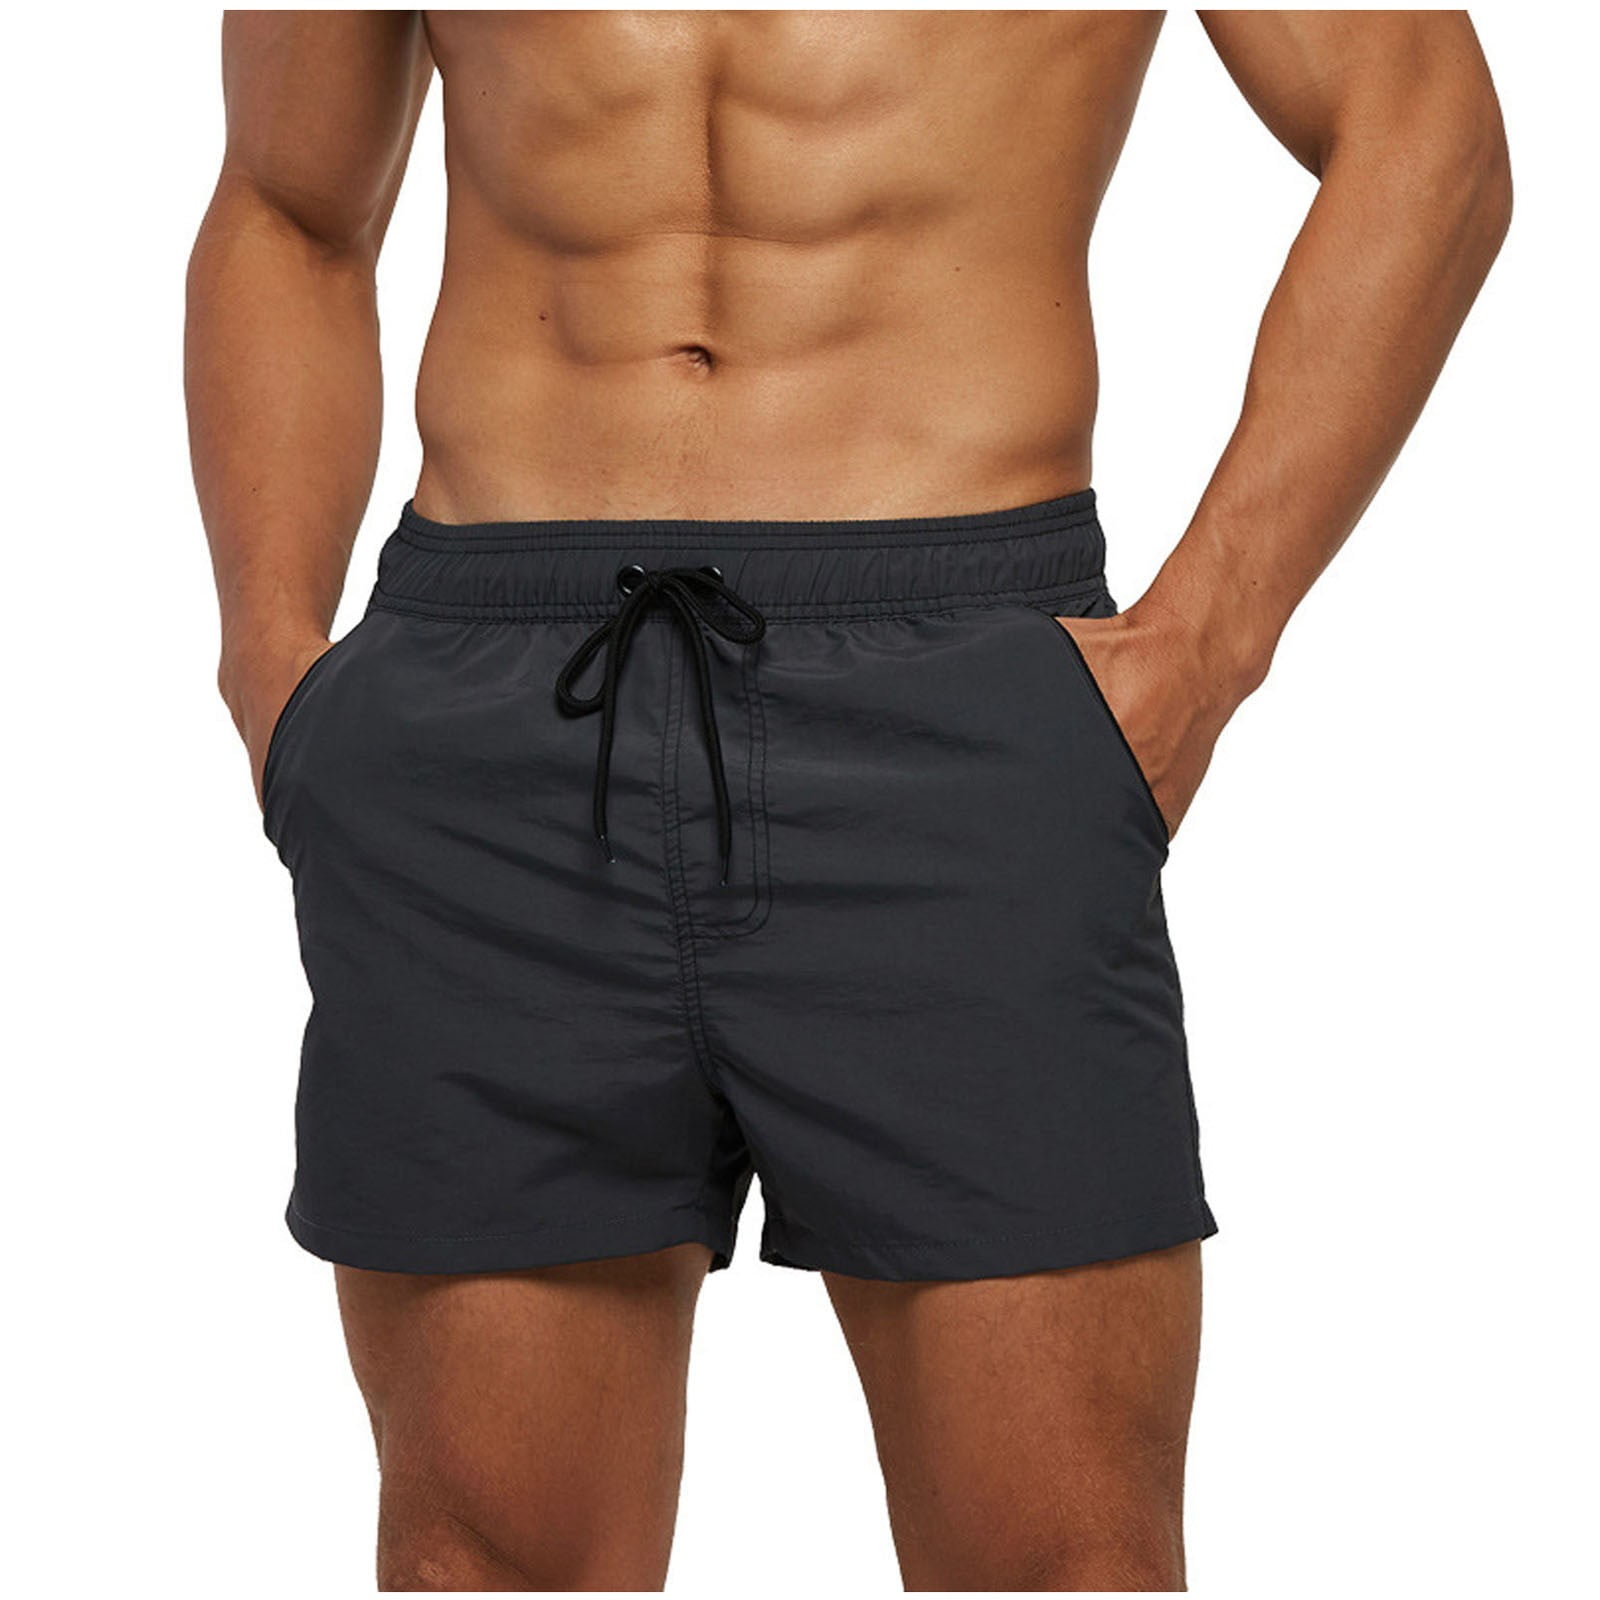 Ausyst Swim Trunks Men Slim Swim Shorts with Zipper Pockets Quick Dry ...